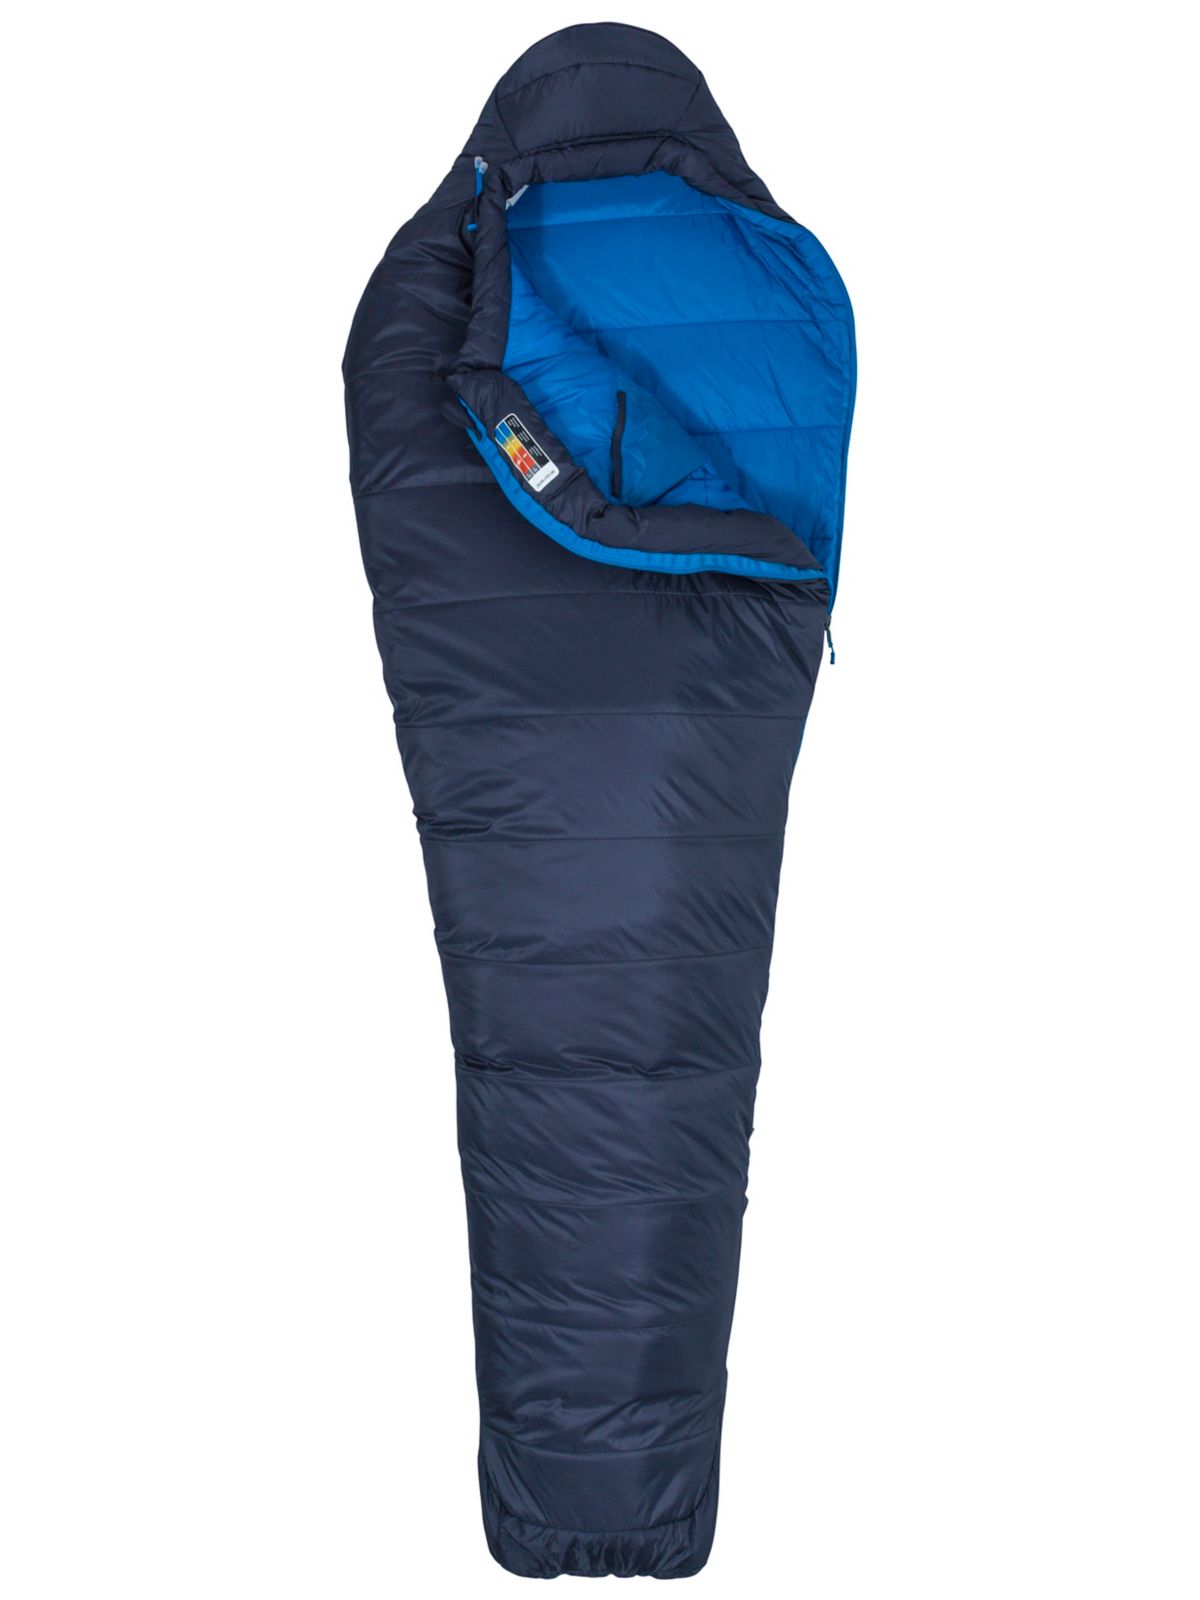 Ultra Elite 20° Sleeping Bag - Long